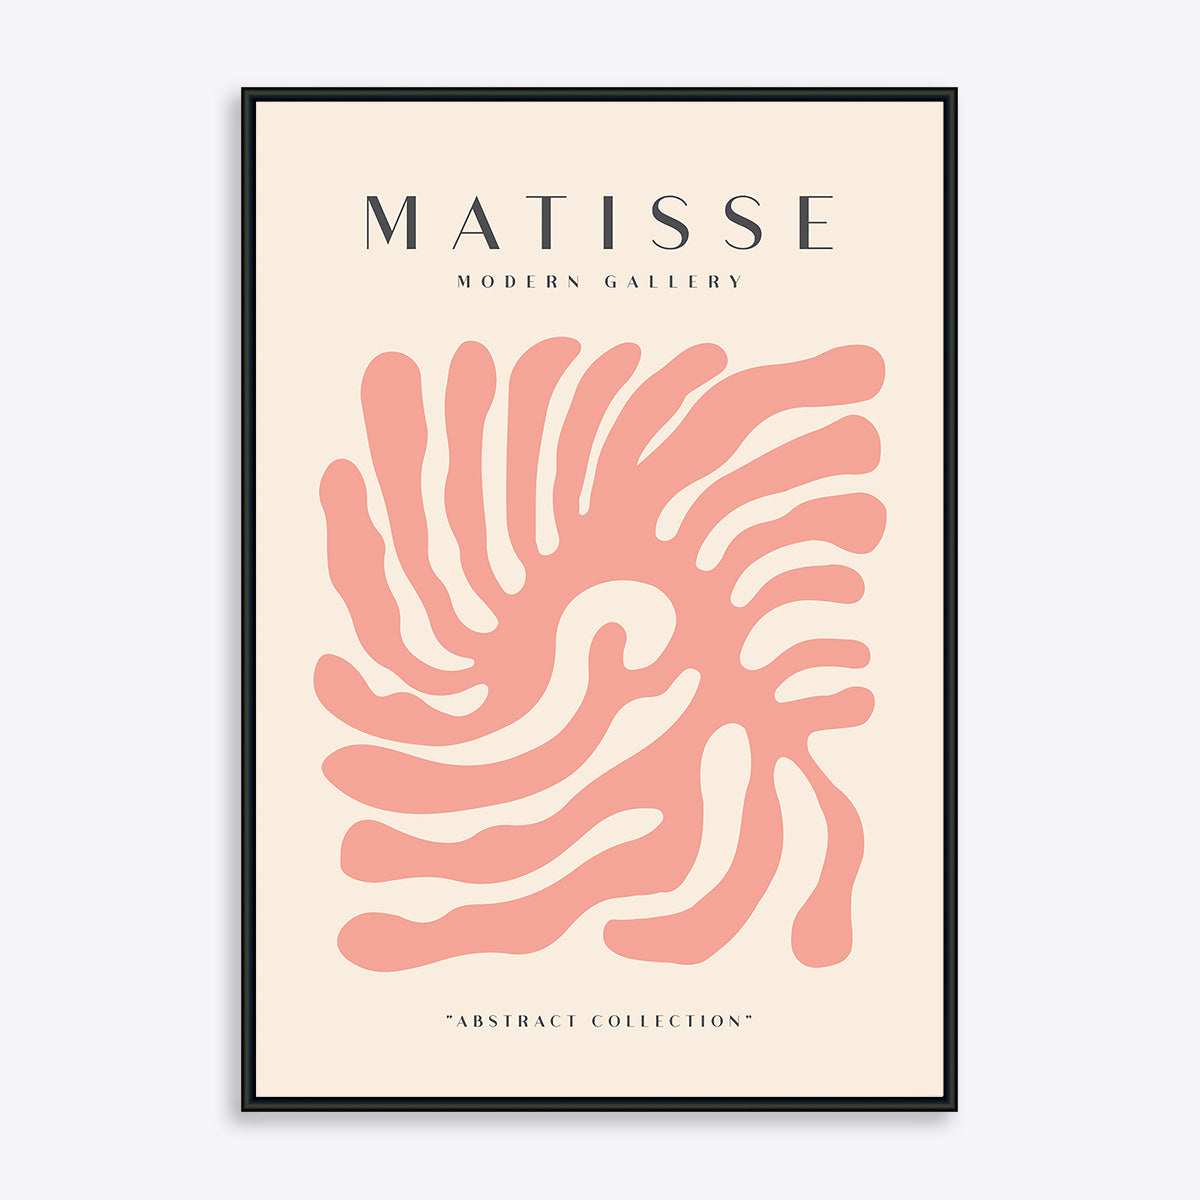 Matisse plakat med motiv i rosa